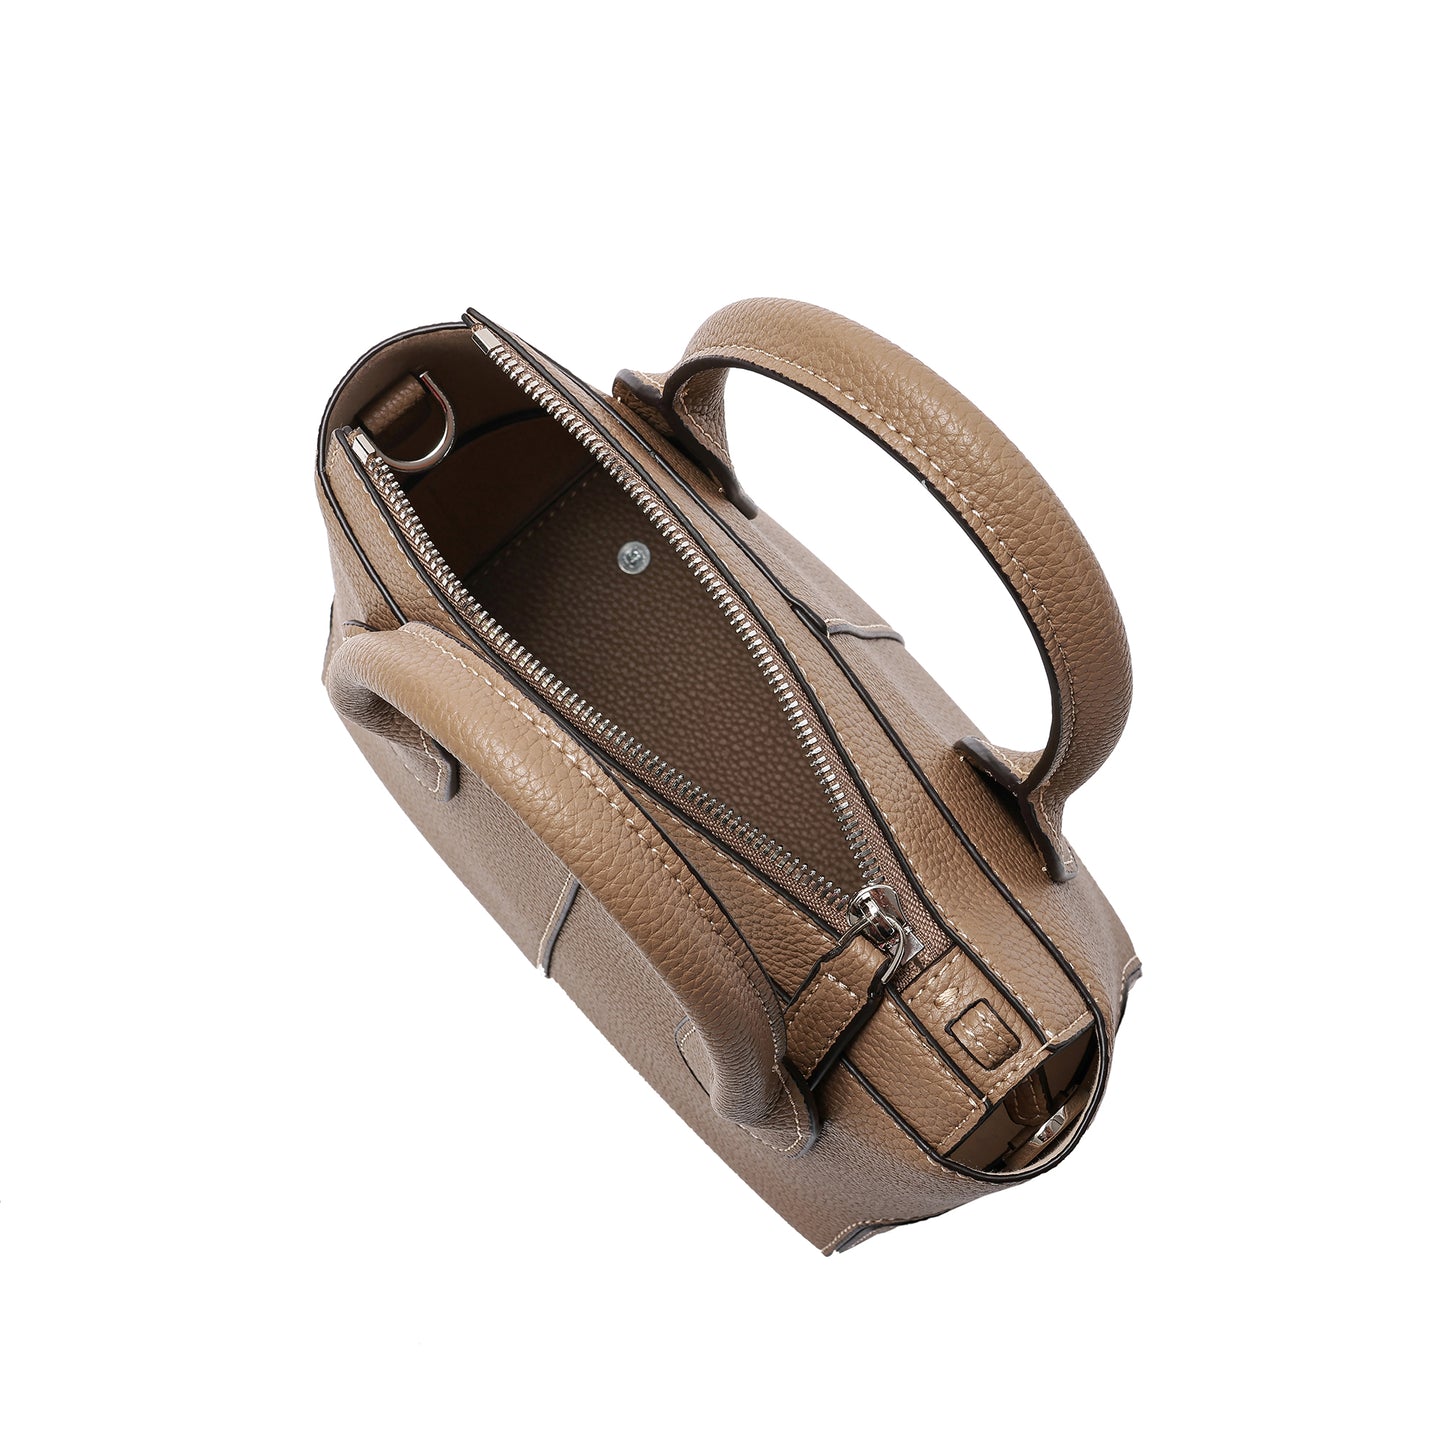 Full-Grain Leather Top-Handles Crossbody/Shoulder Bag